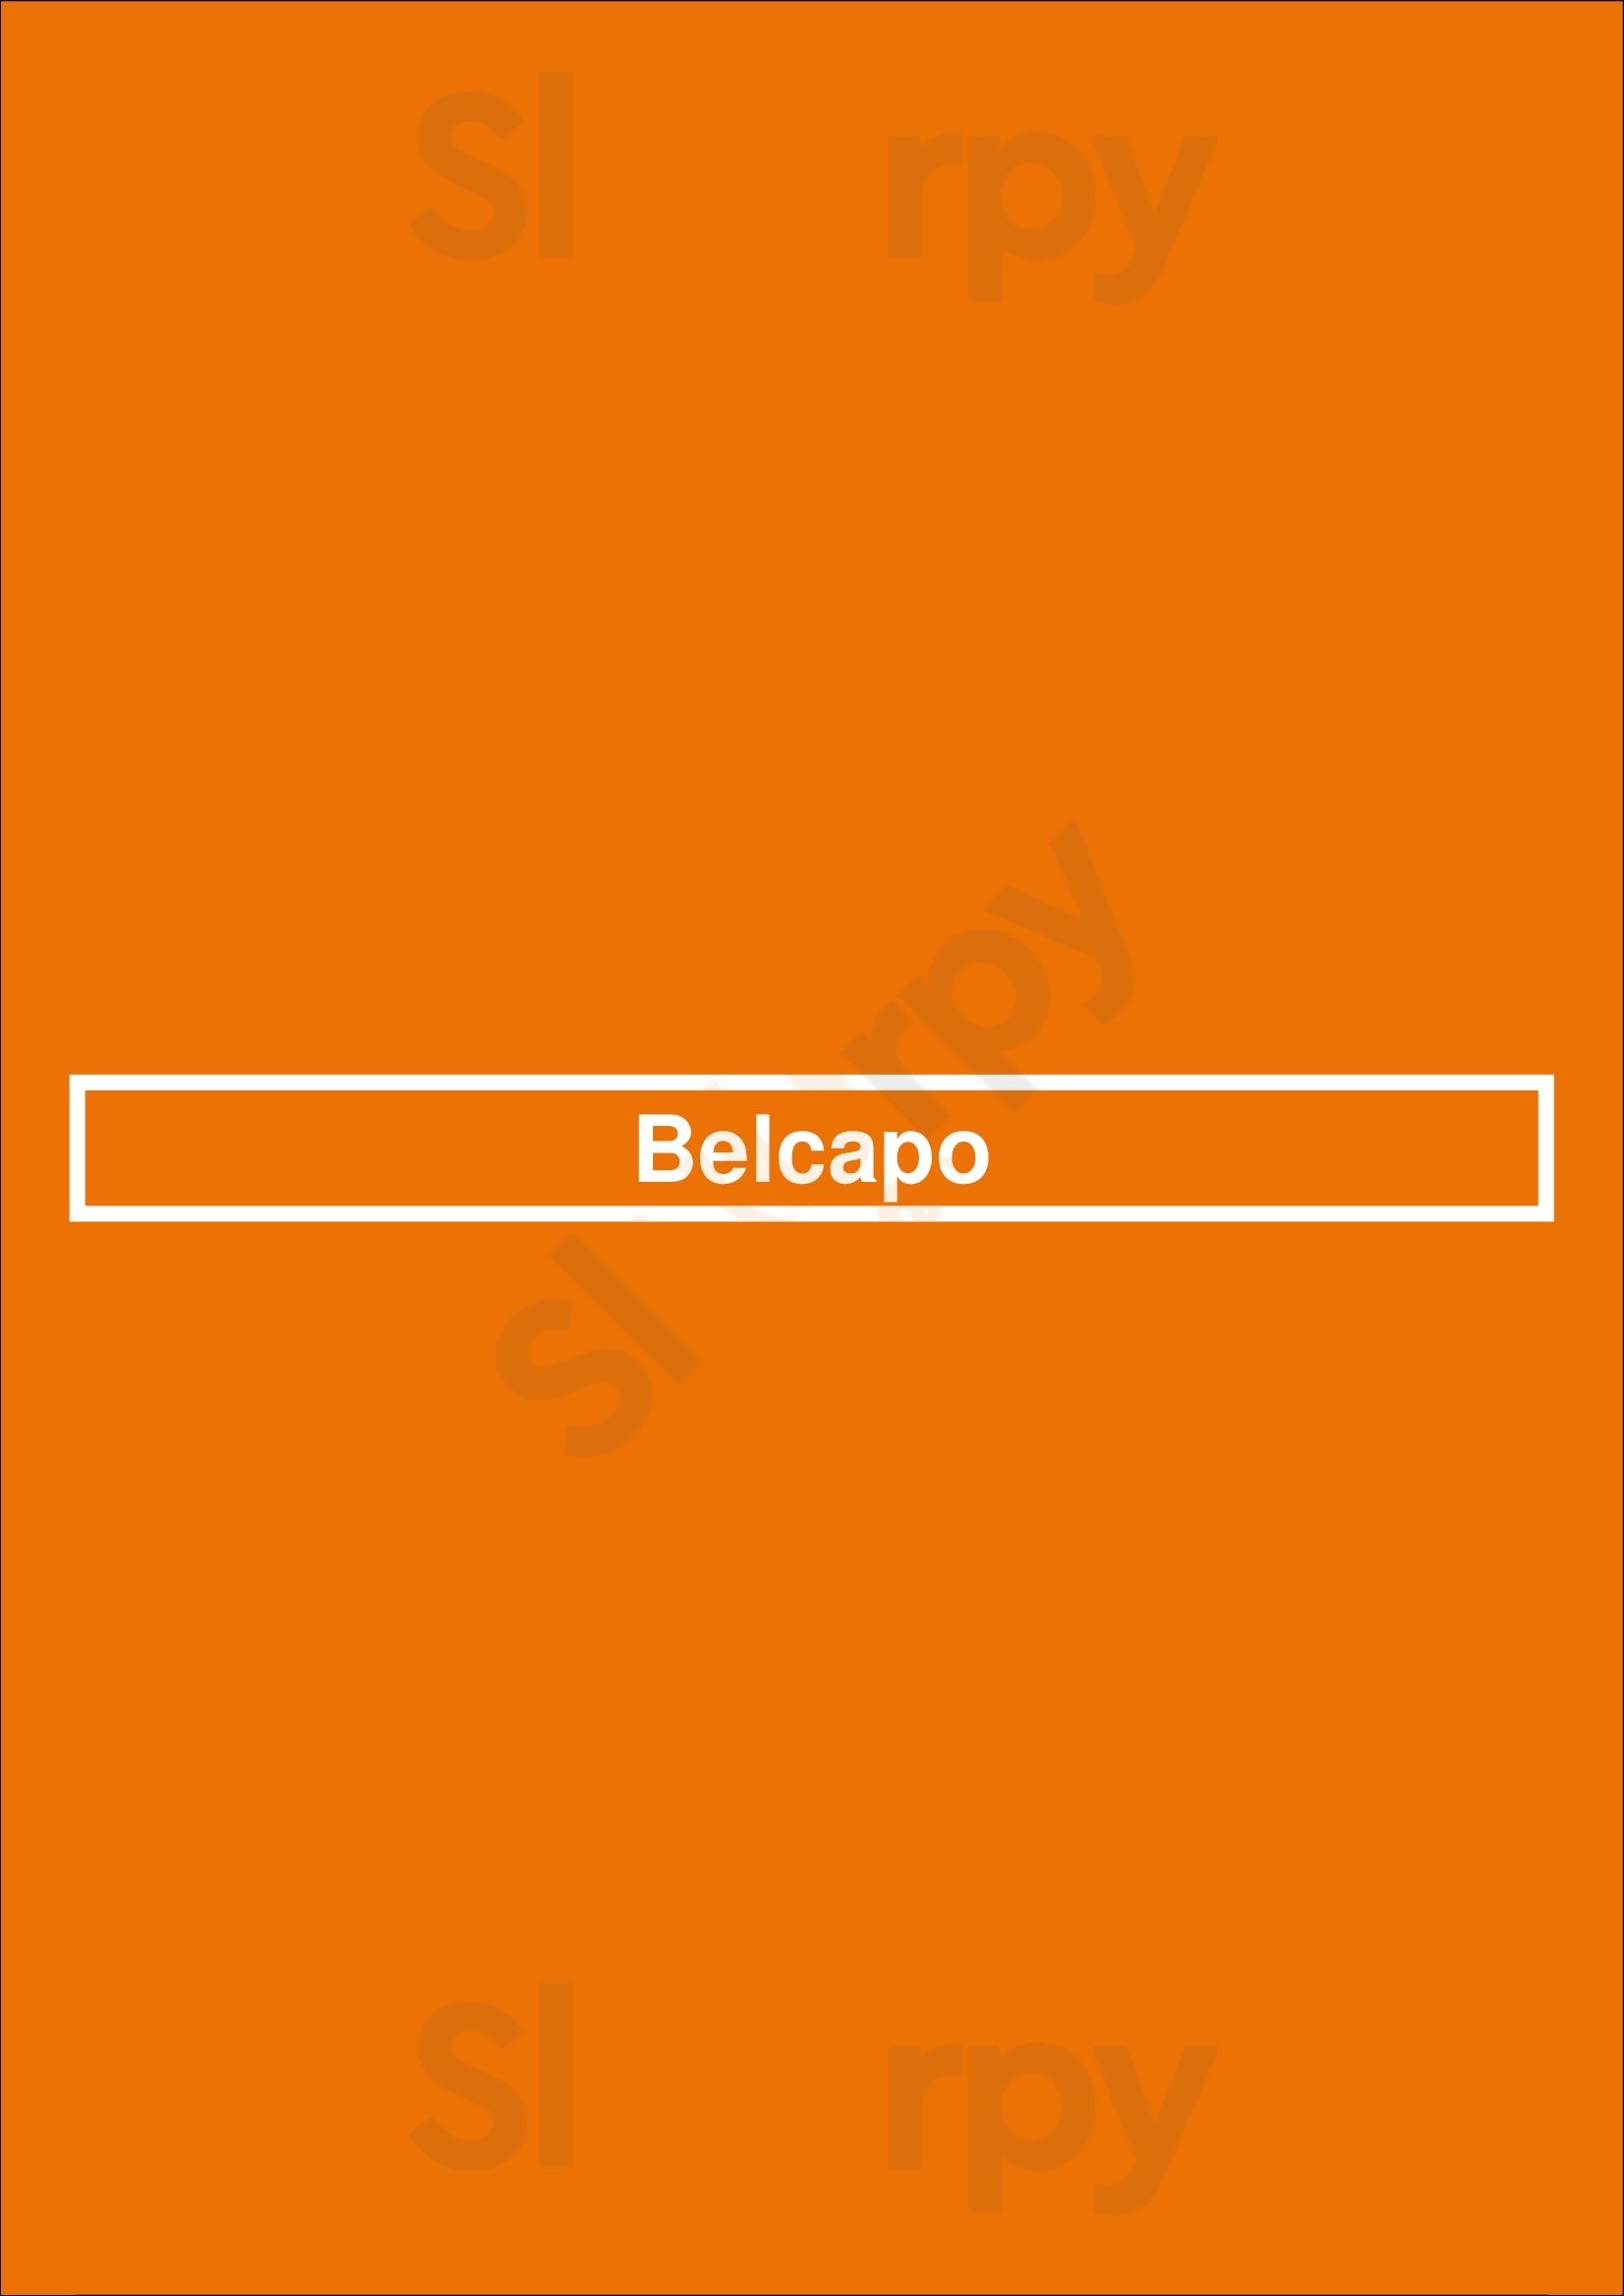 Belcapo Helmond Menu - 1